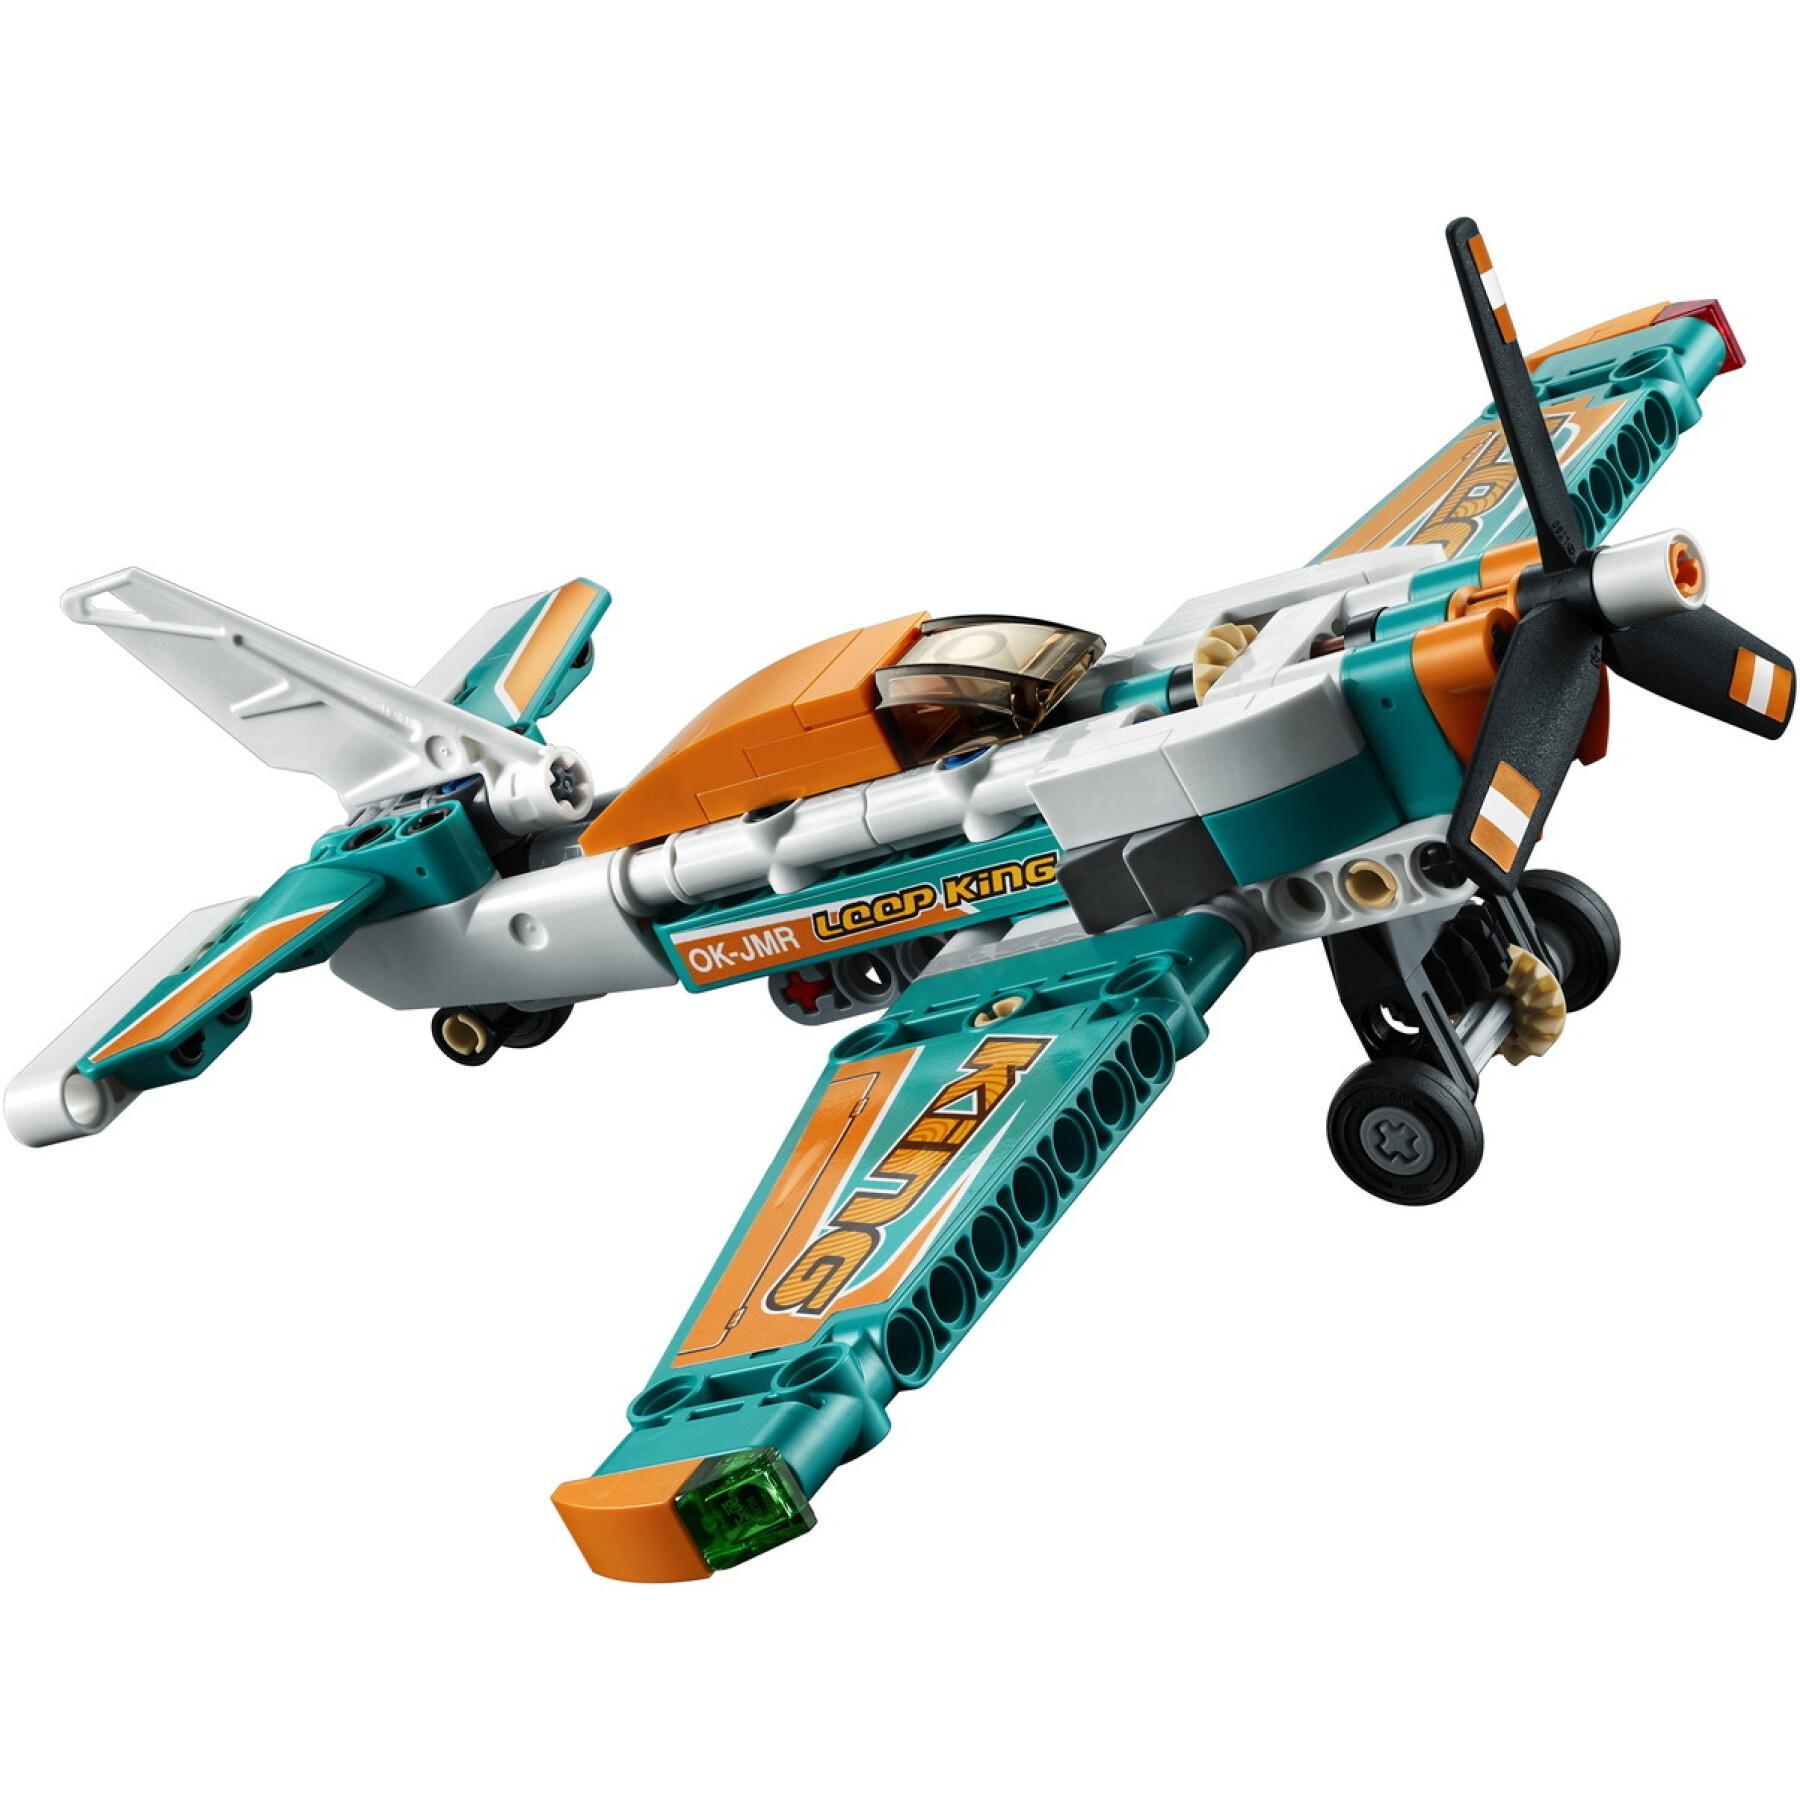 Avião de corrida Lego Technic